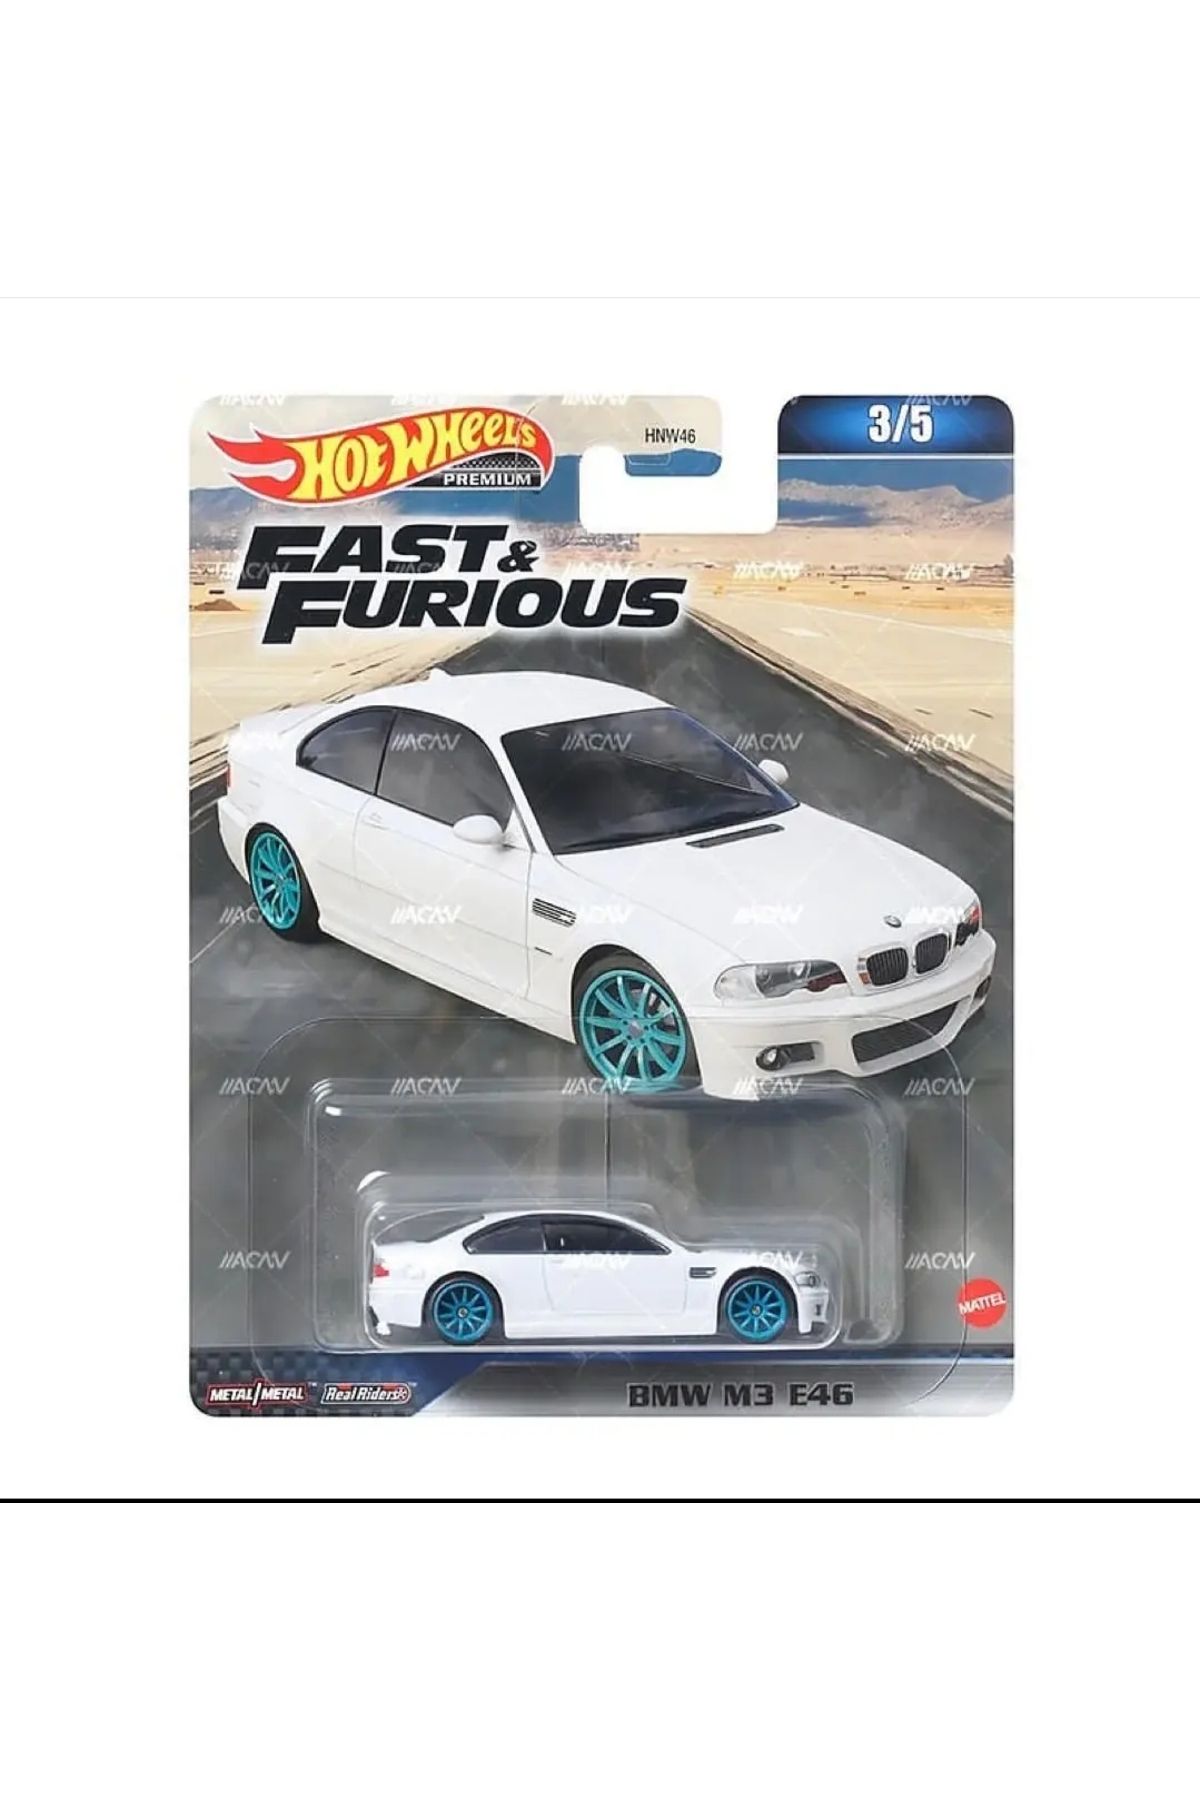 HOT WHEELS Mattel Premium Fast and Furious BMW M3 E46 Hızlı ve Öfkeli Oyuncak Araba Tekli